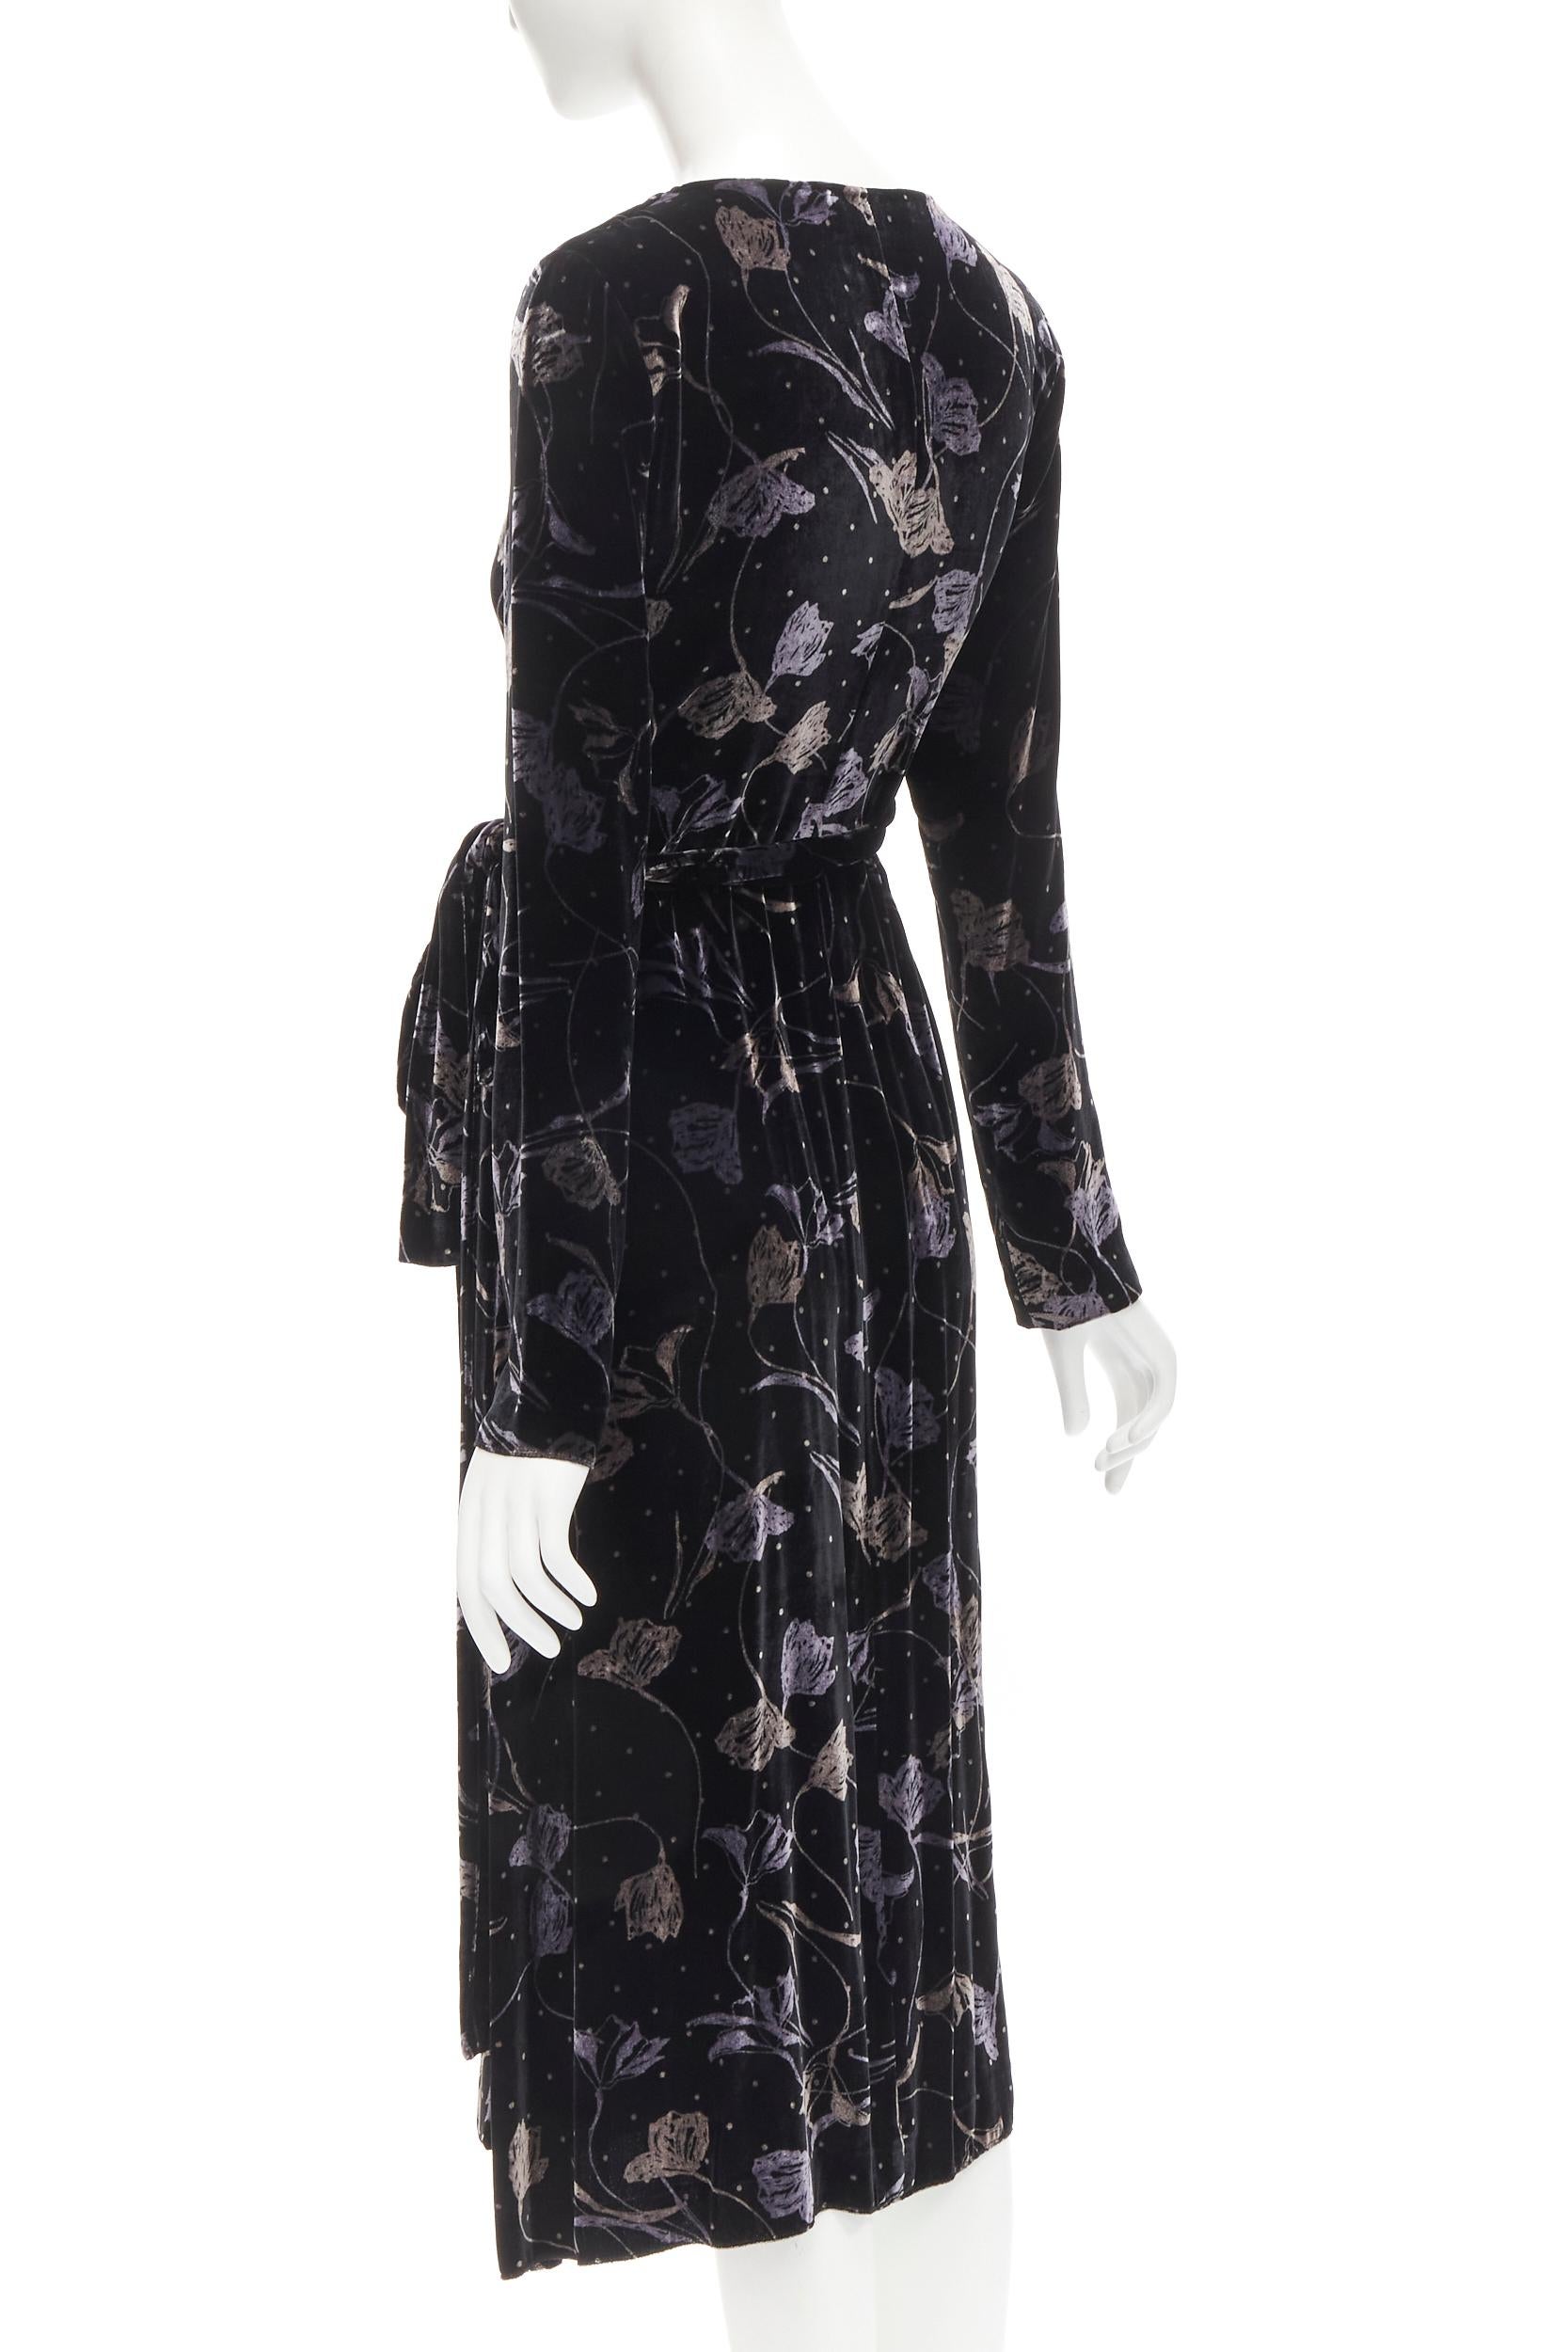 Black DIANE VON FUSTENBERG black floral print velvet wrap dress robe XS For Sale